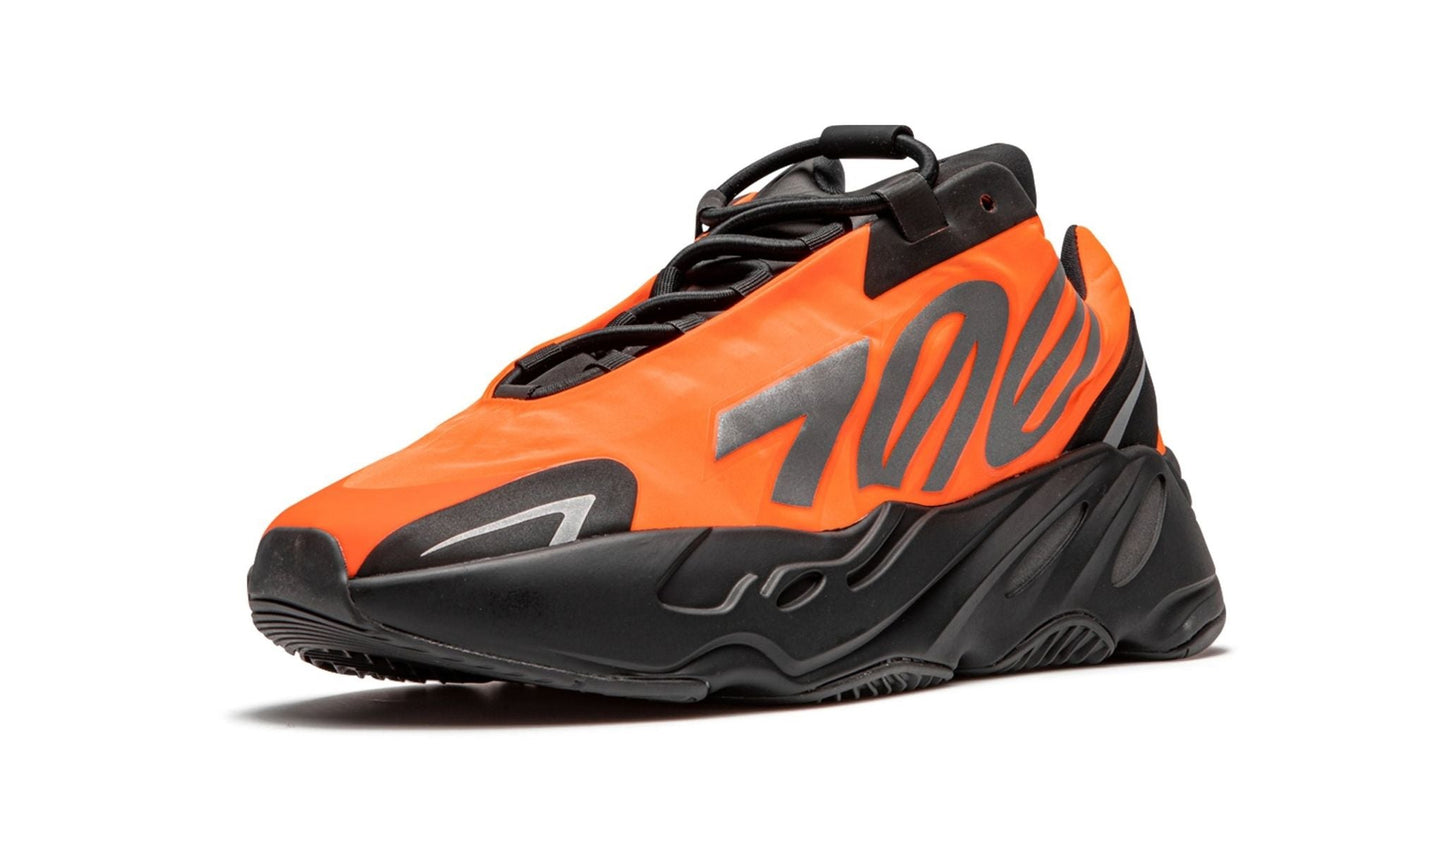 Adidas Yeezy Boost 700 MNVN “Orange”